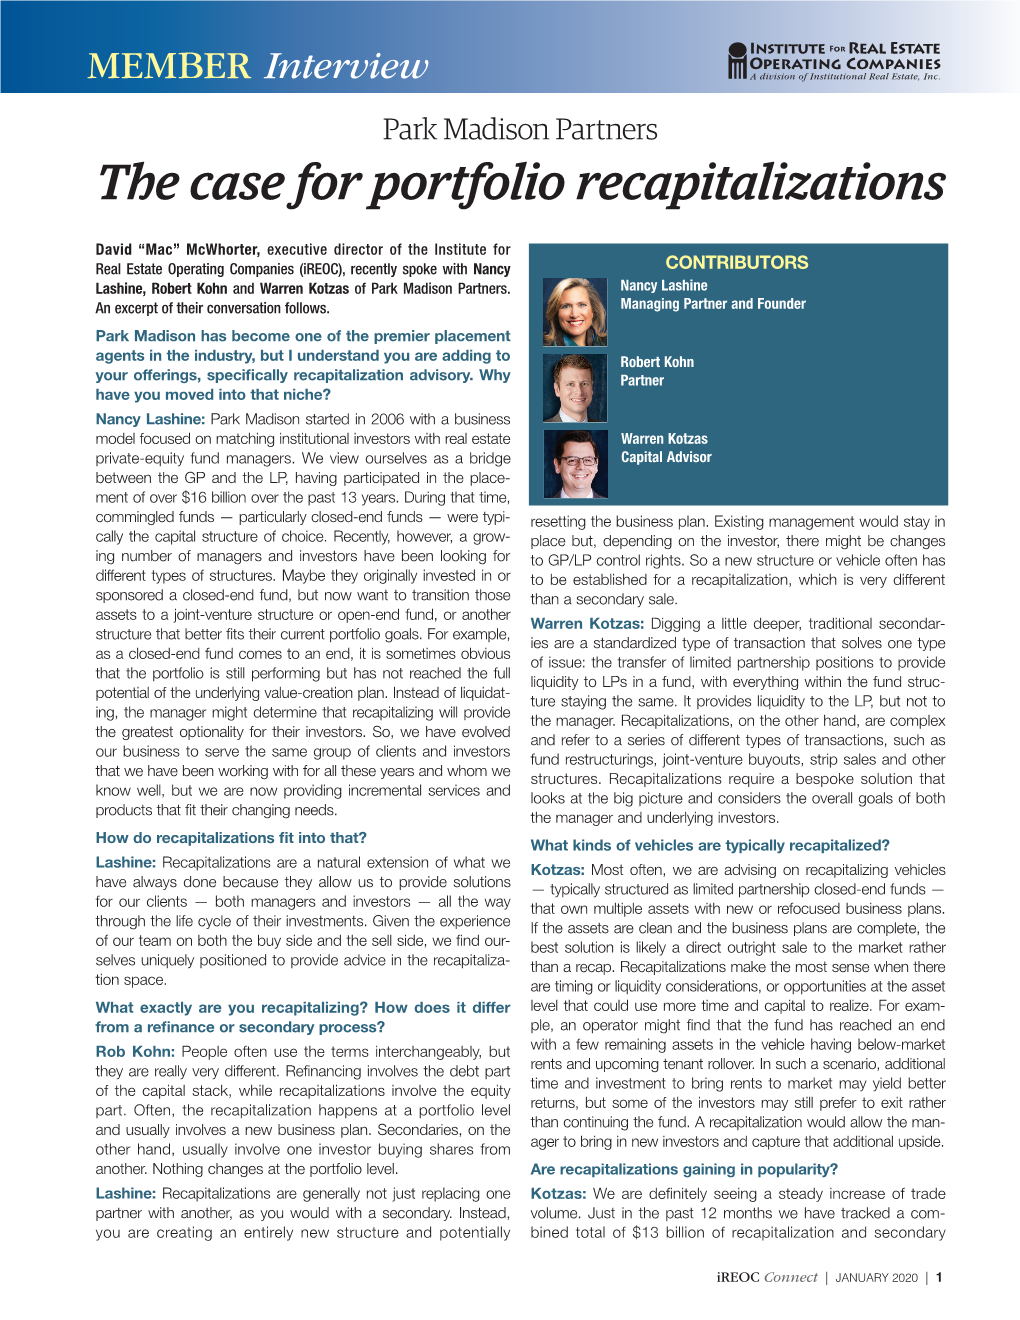 The Case for Portfolio Recapitalizations